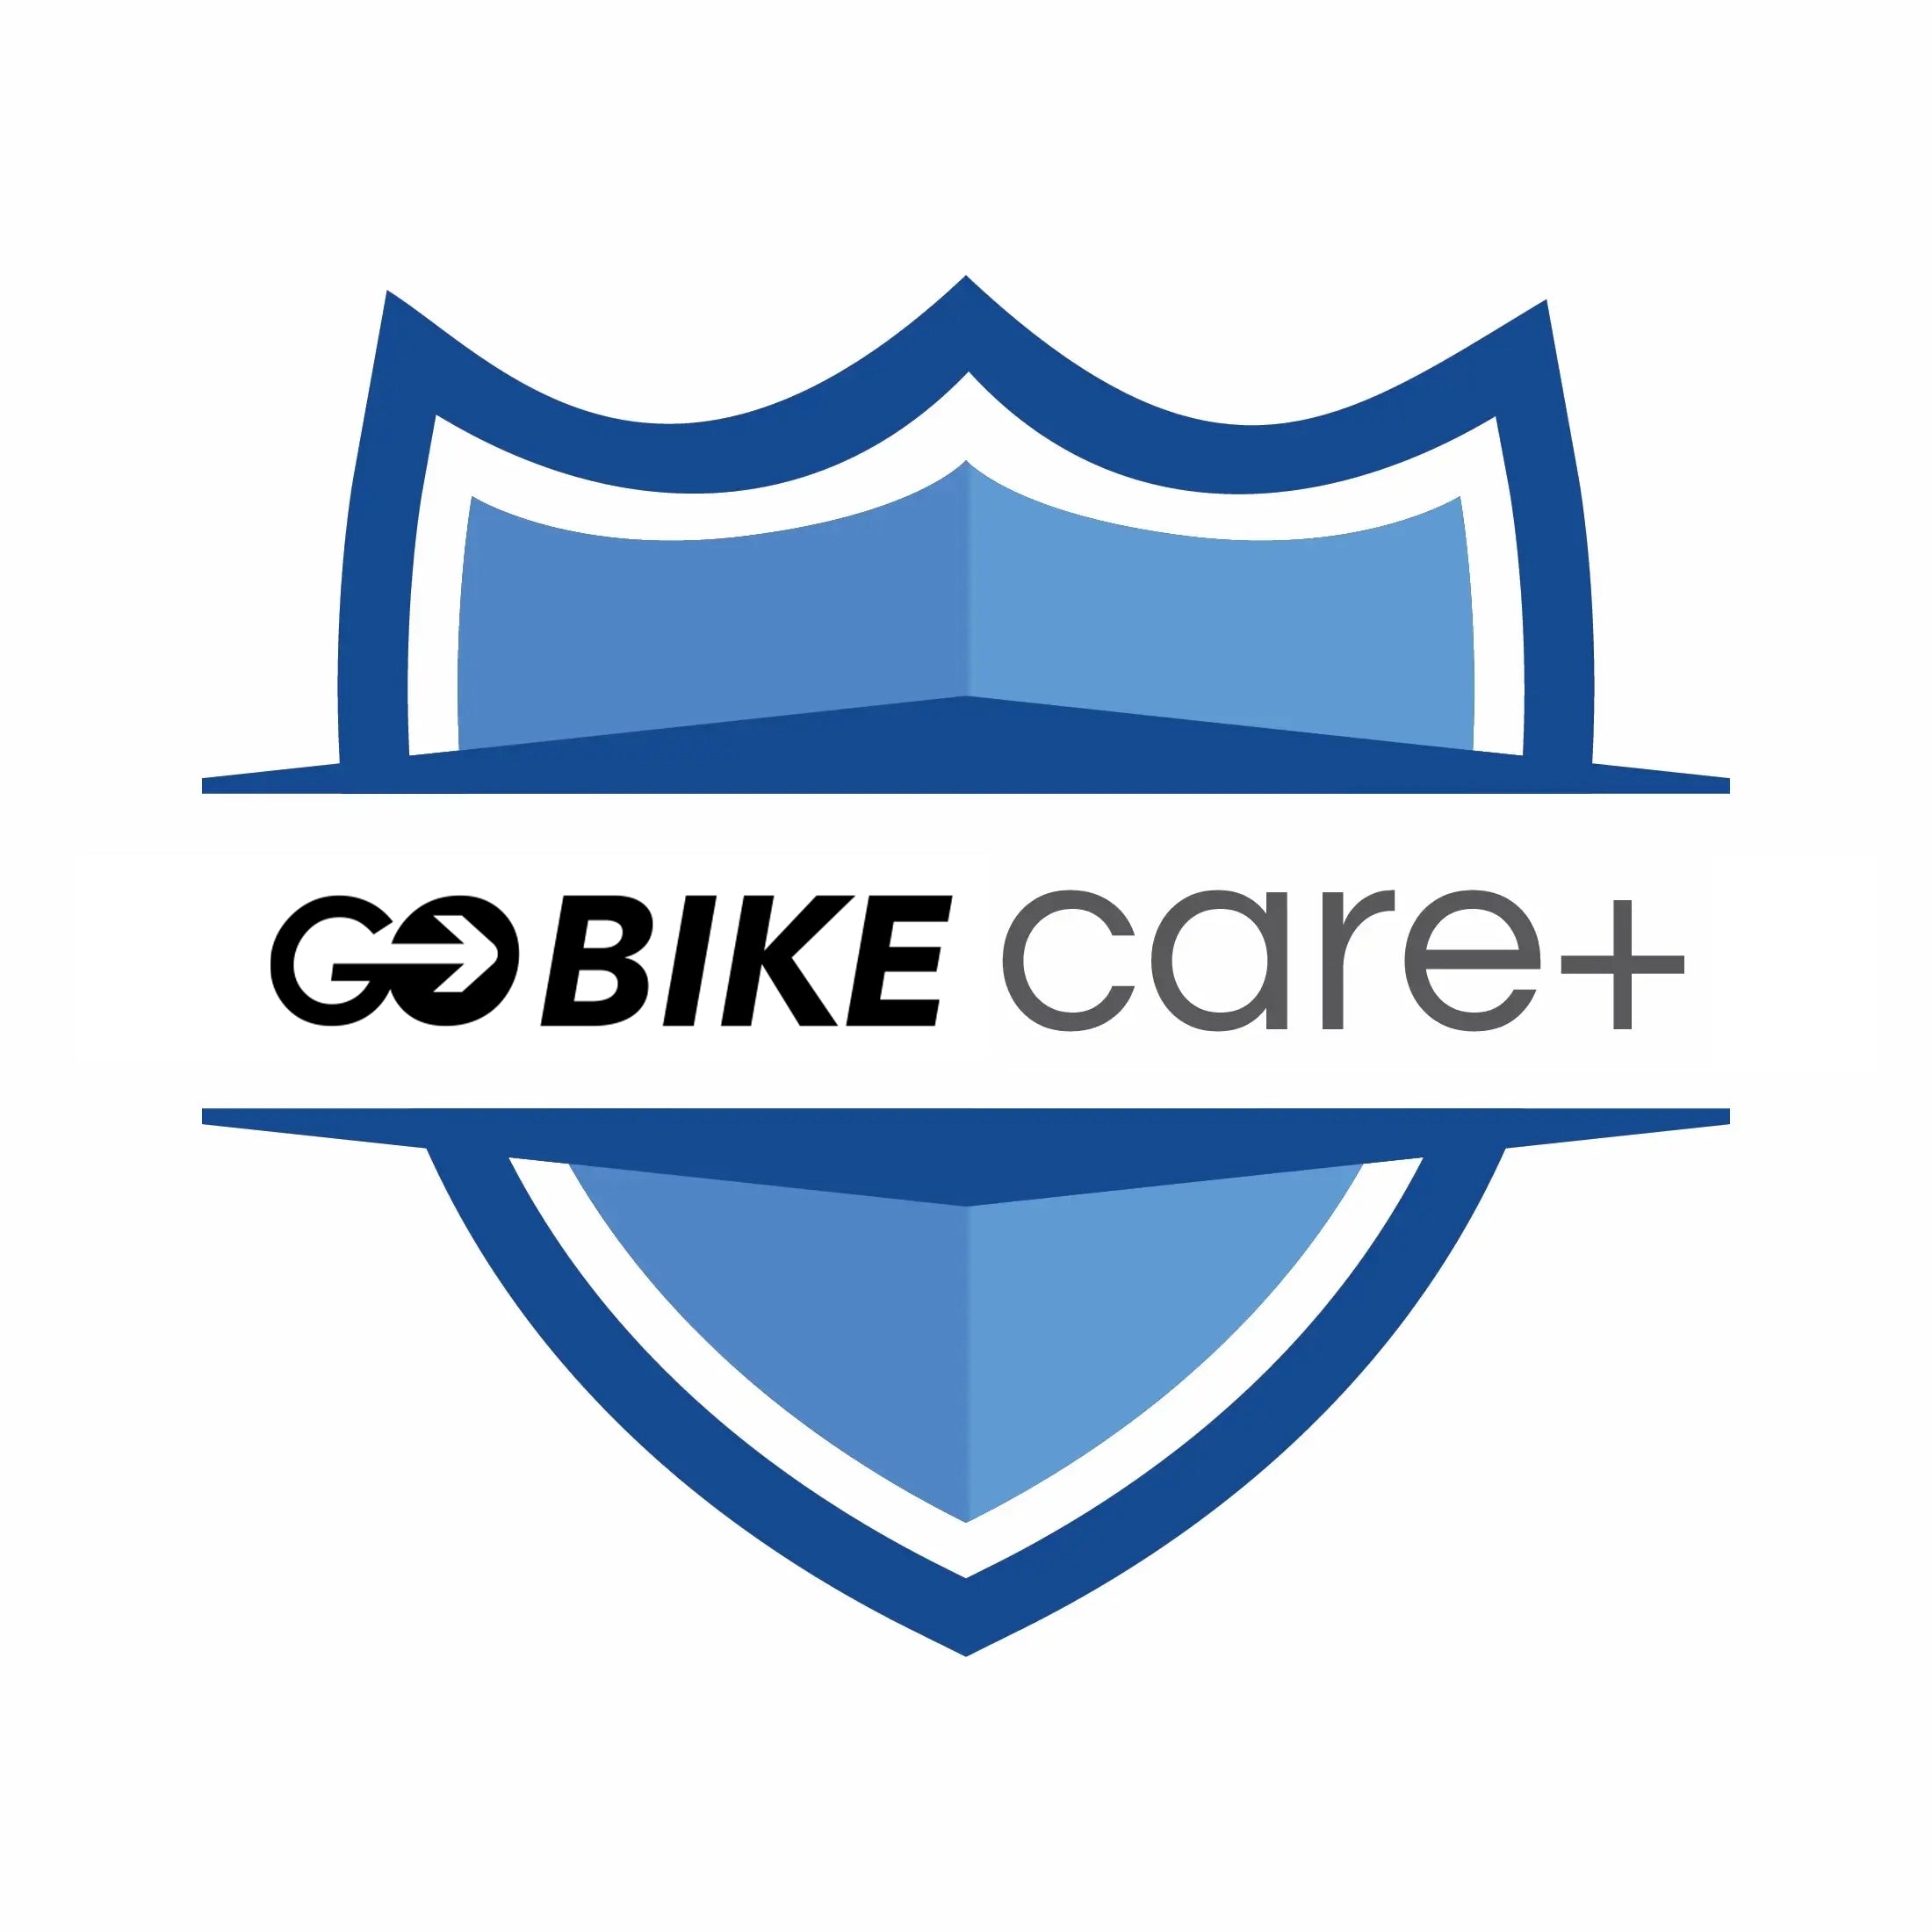 GOBike Care Plus Product